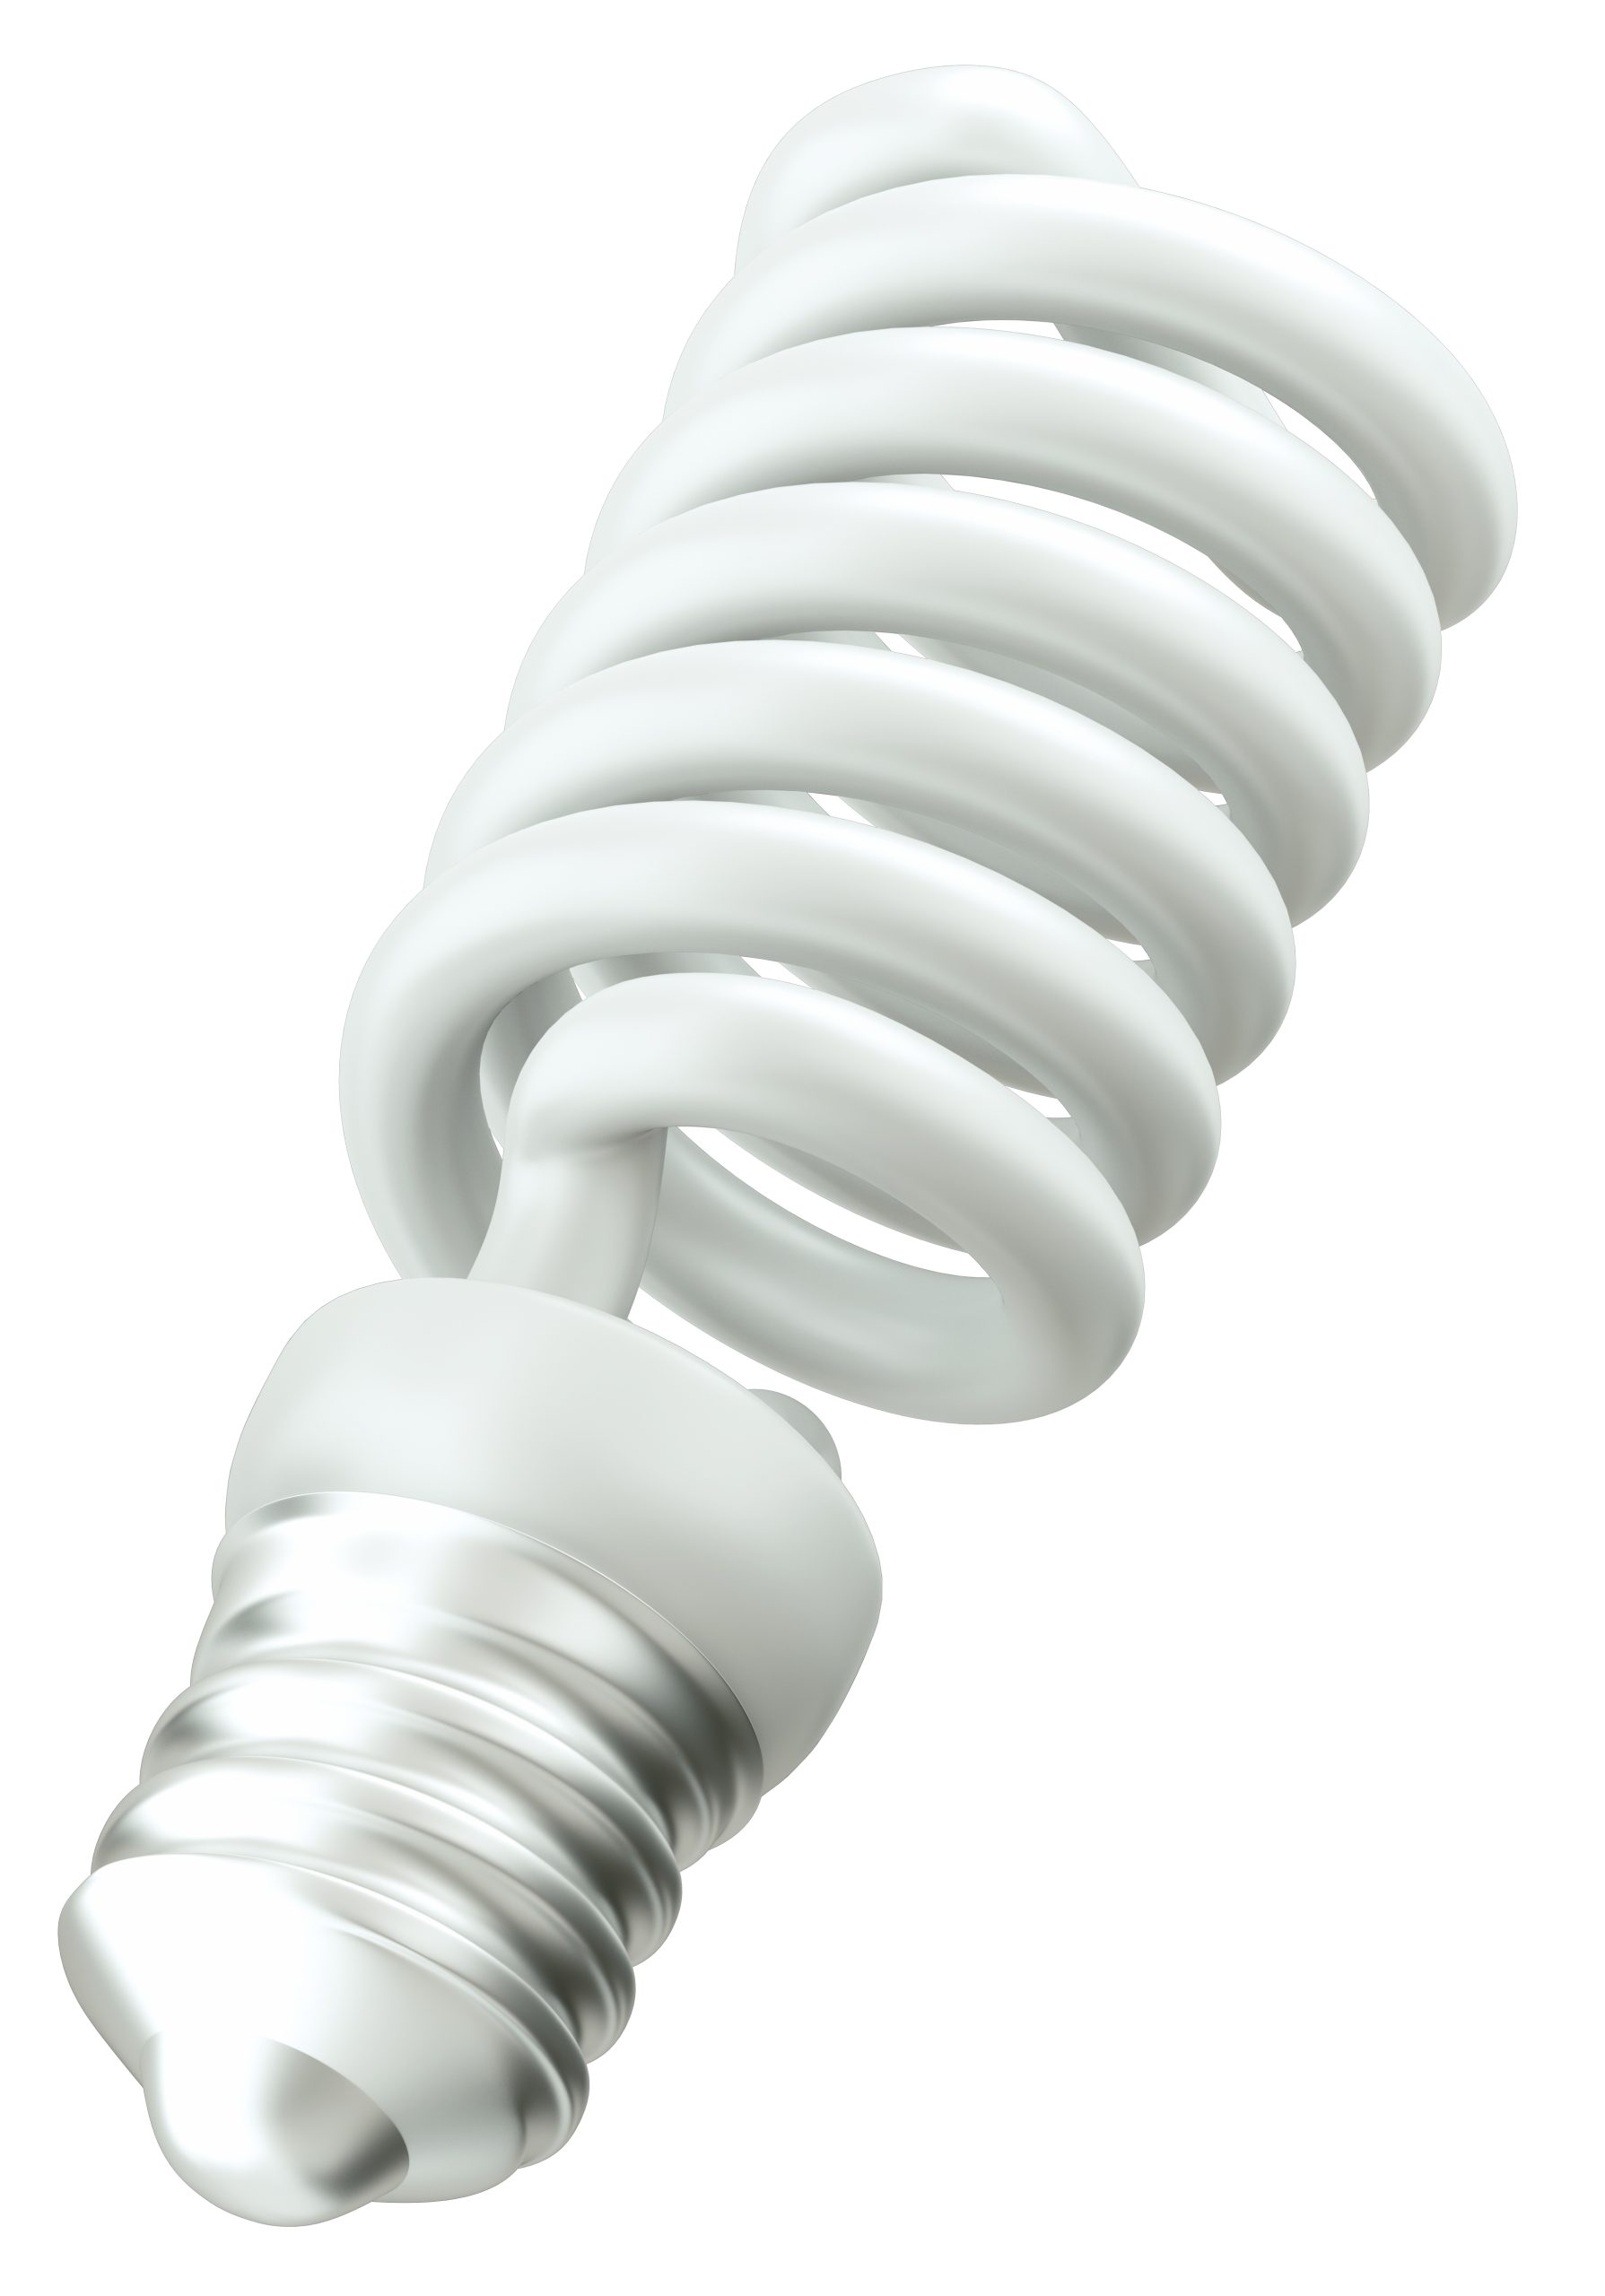 Energy efficient light bulb isolated over white